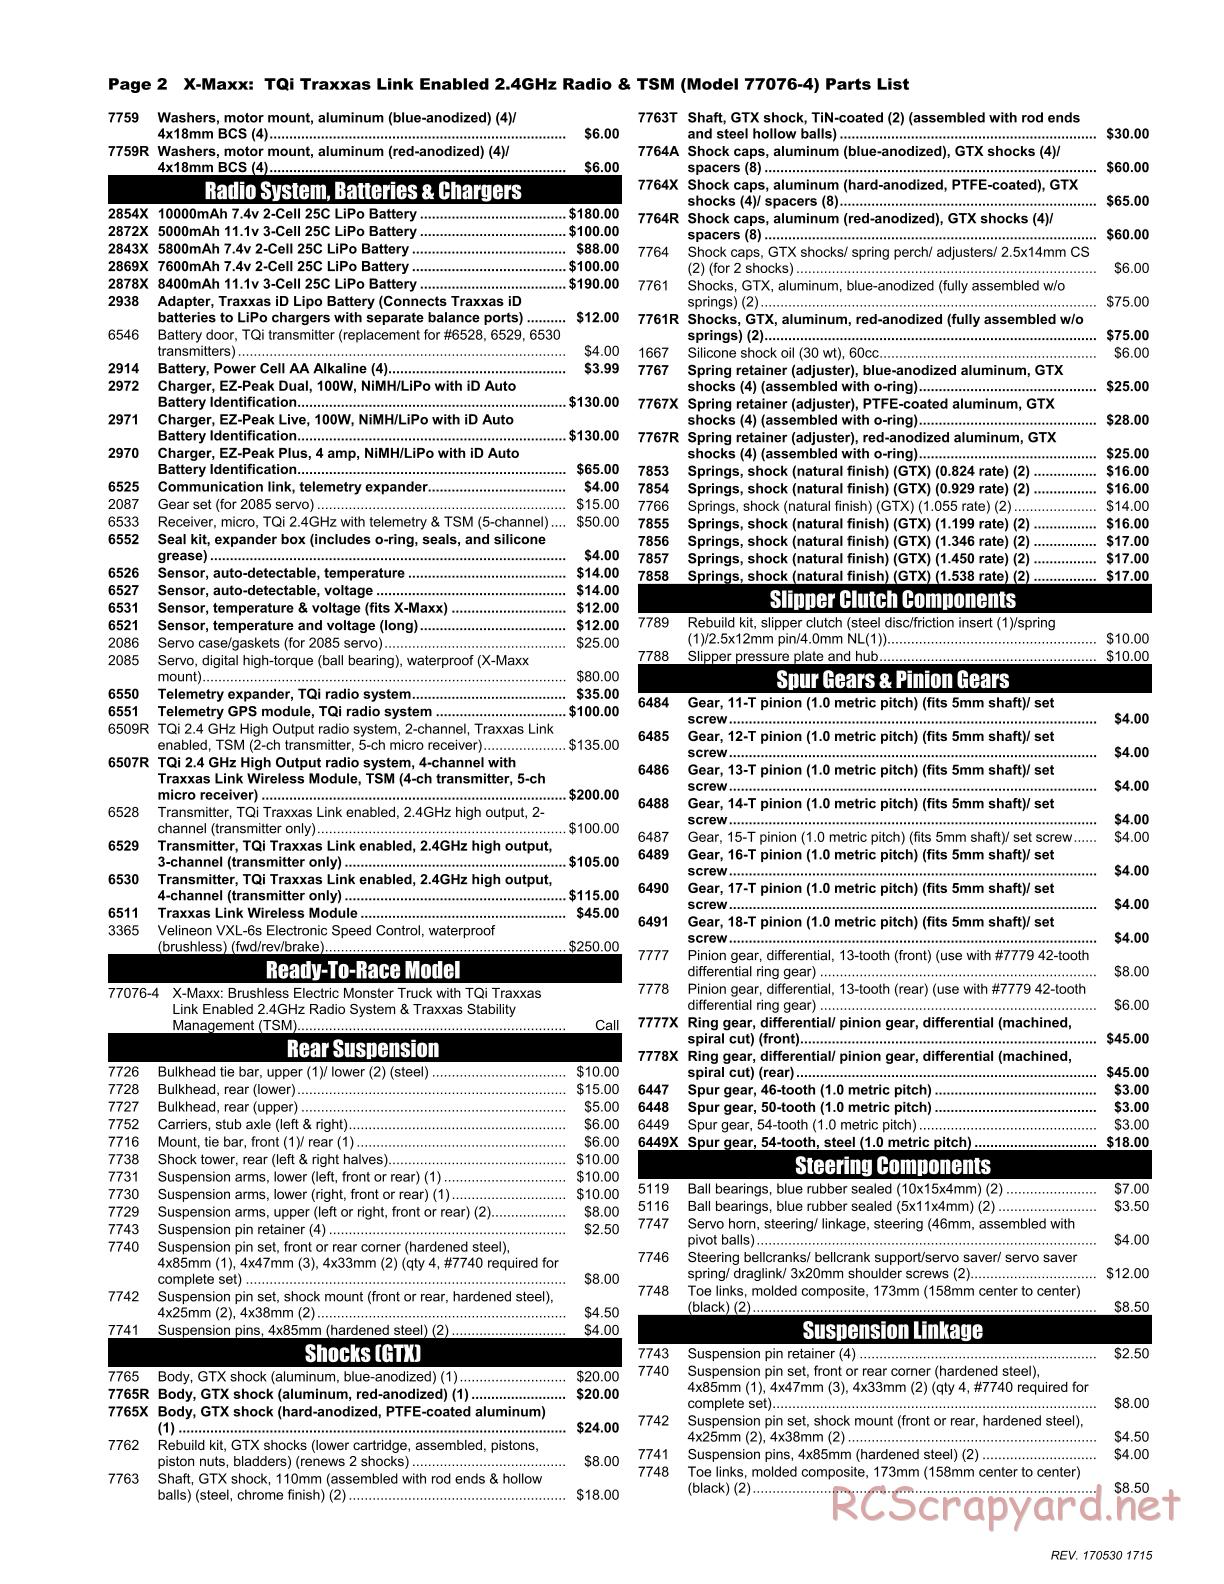 Traxxas - X-Maxx 4x4 TSM (2015) - Parts List - Page 2